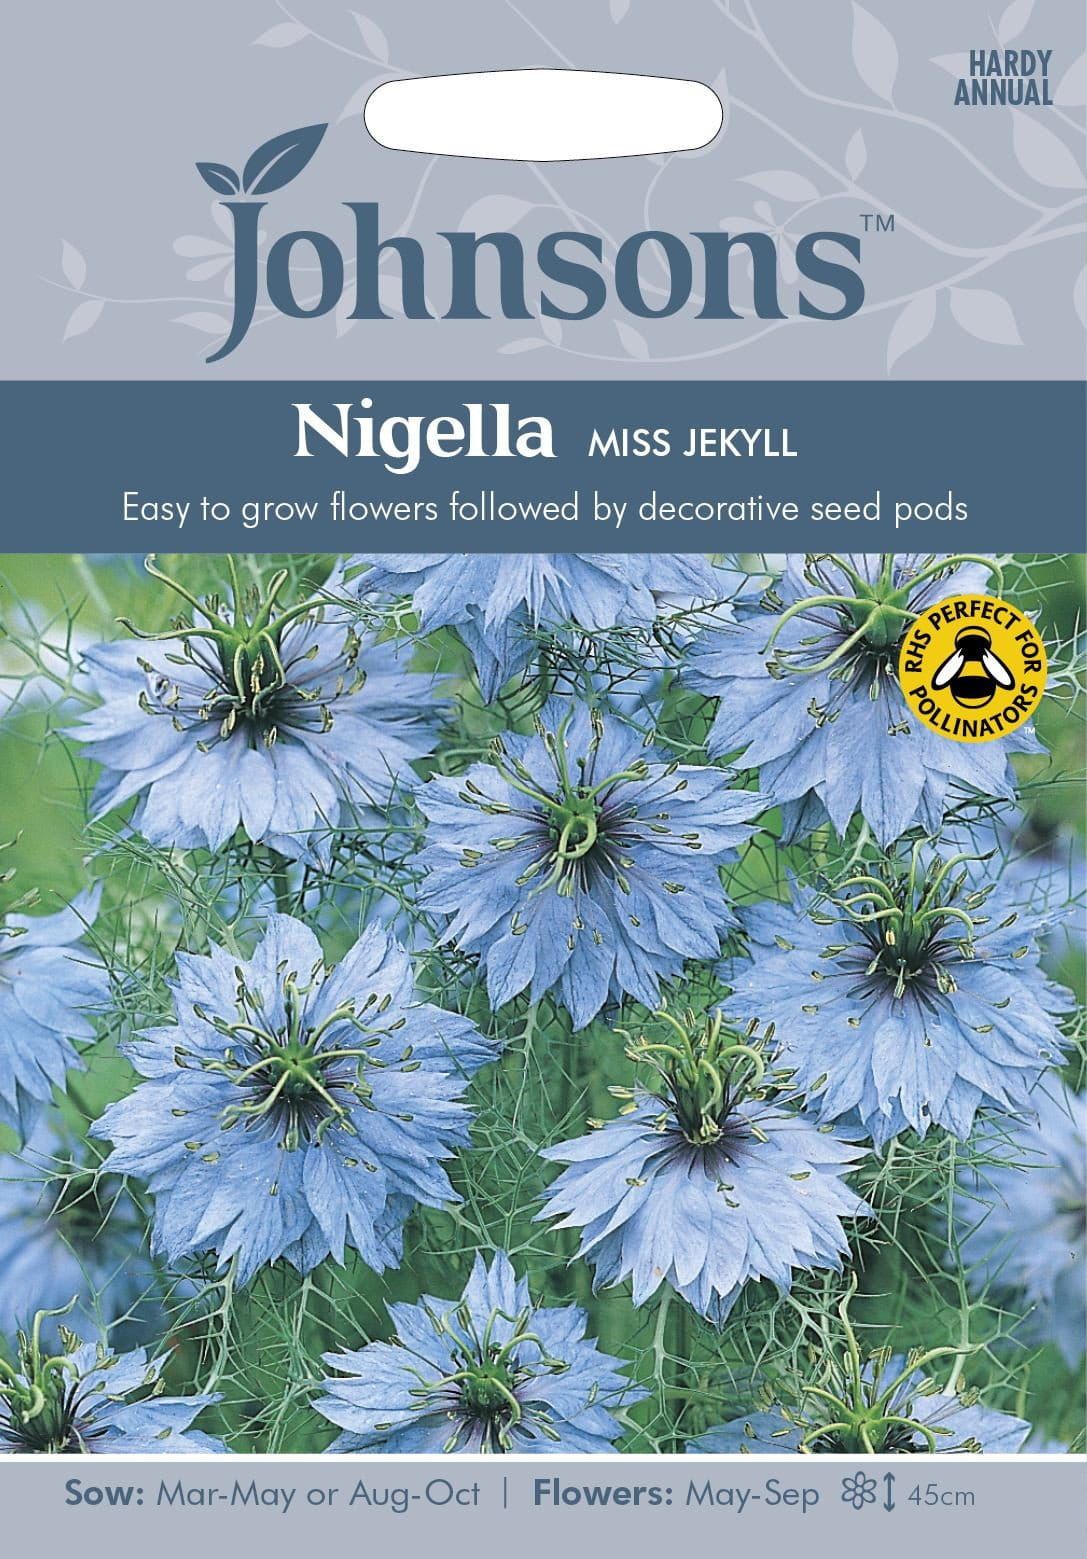 Johnsons Nigella Love in a Mist Miss Jekyll 700 Seeds